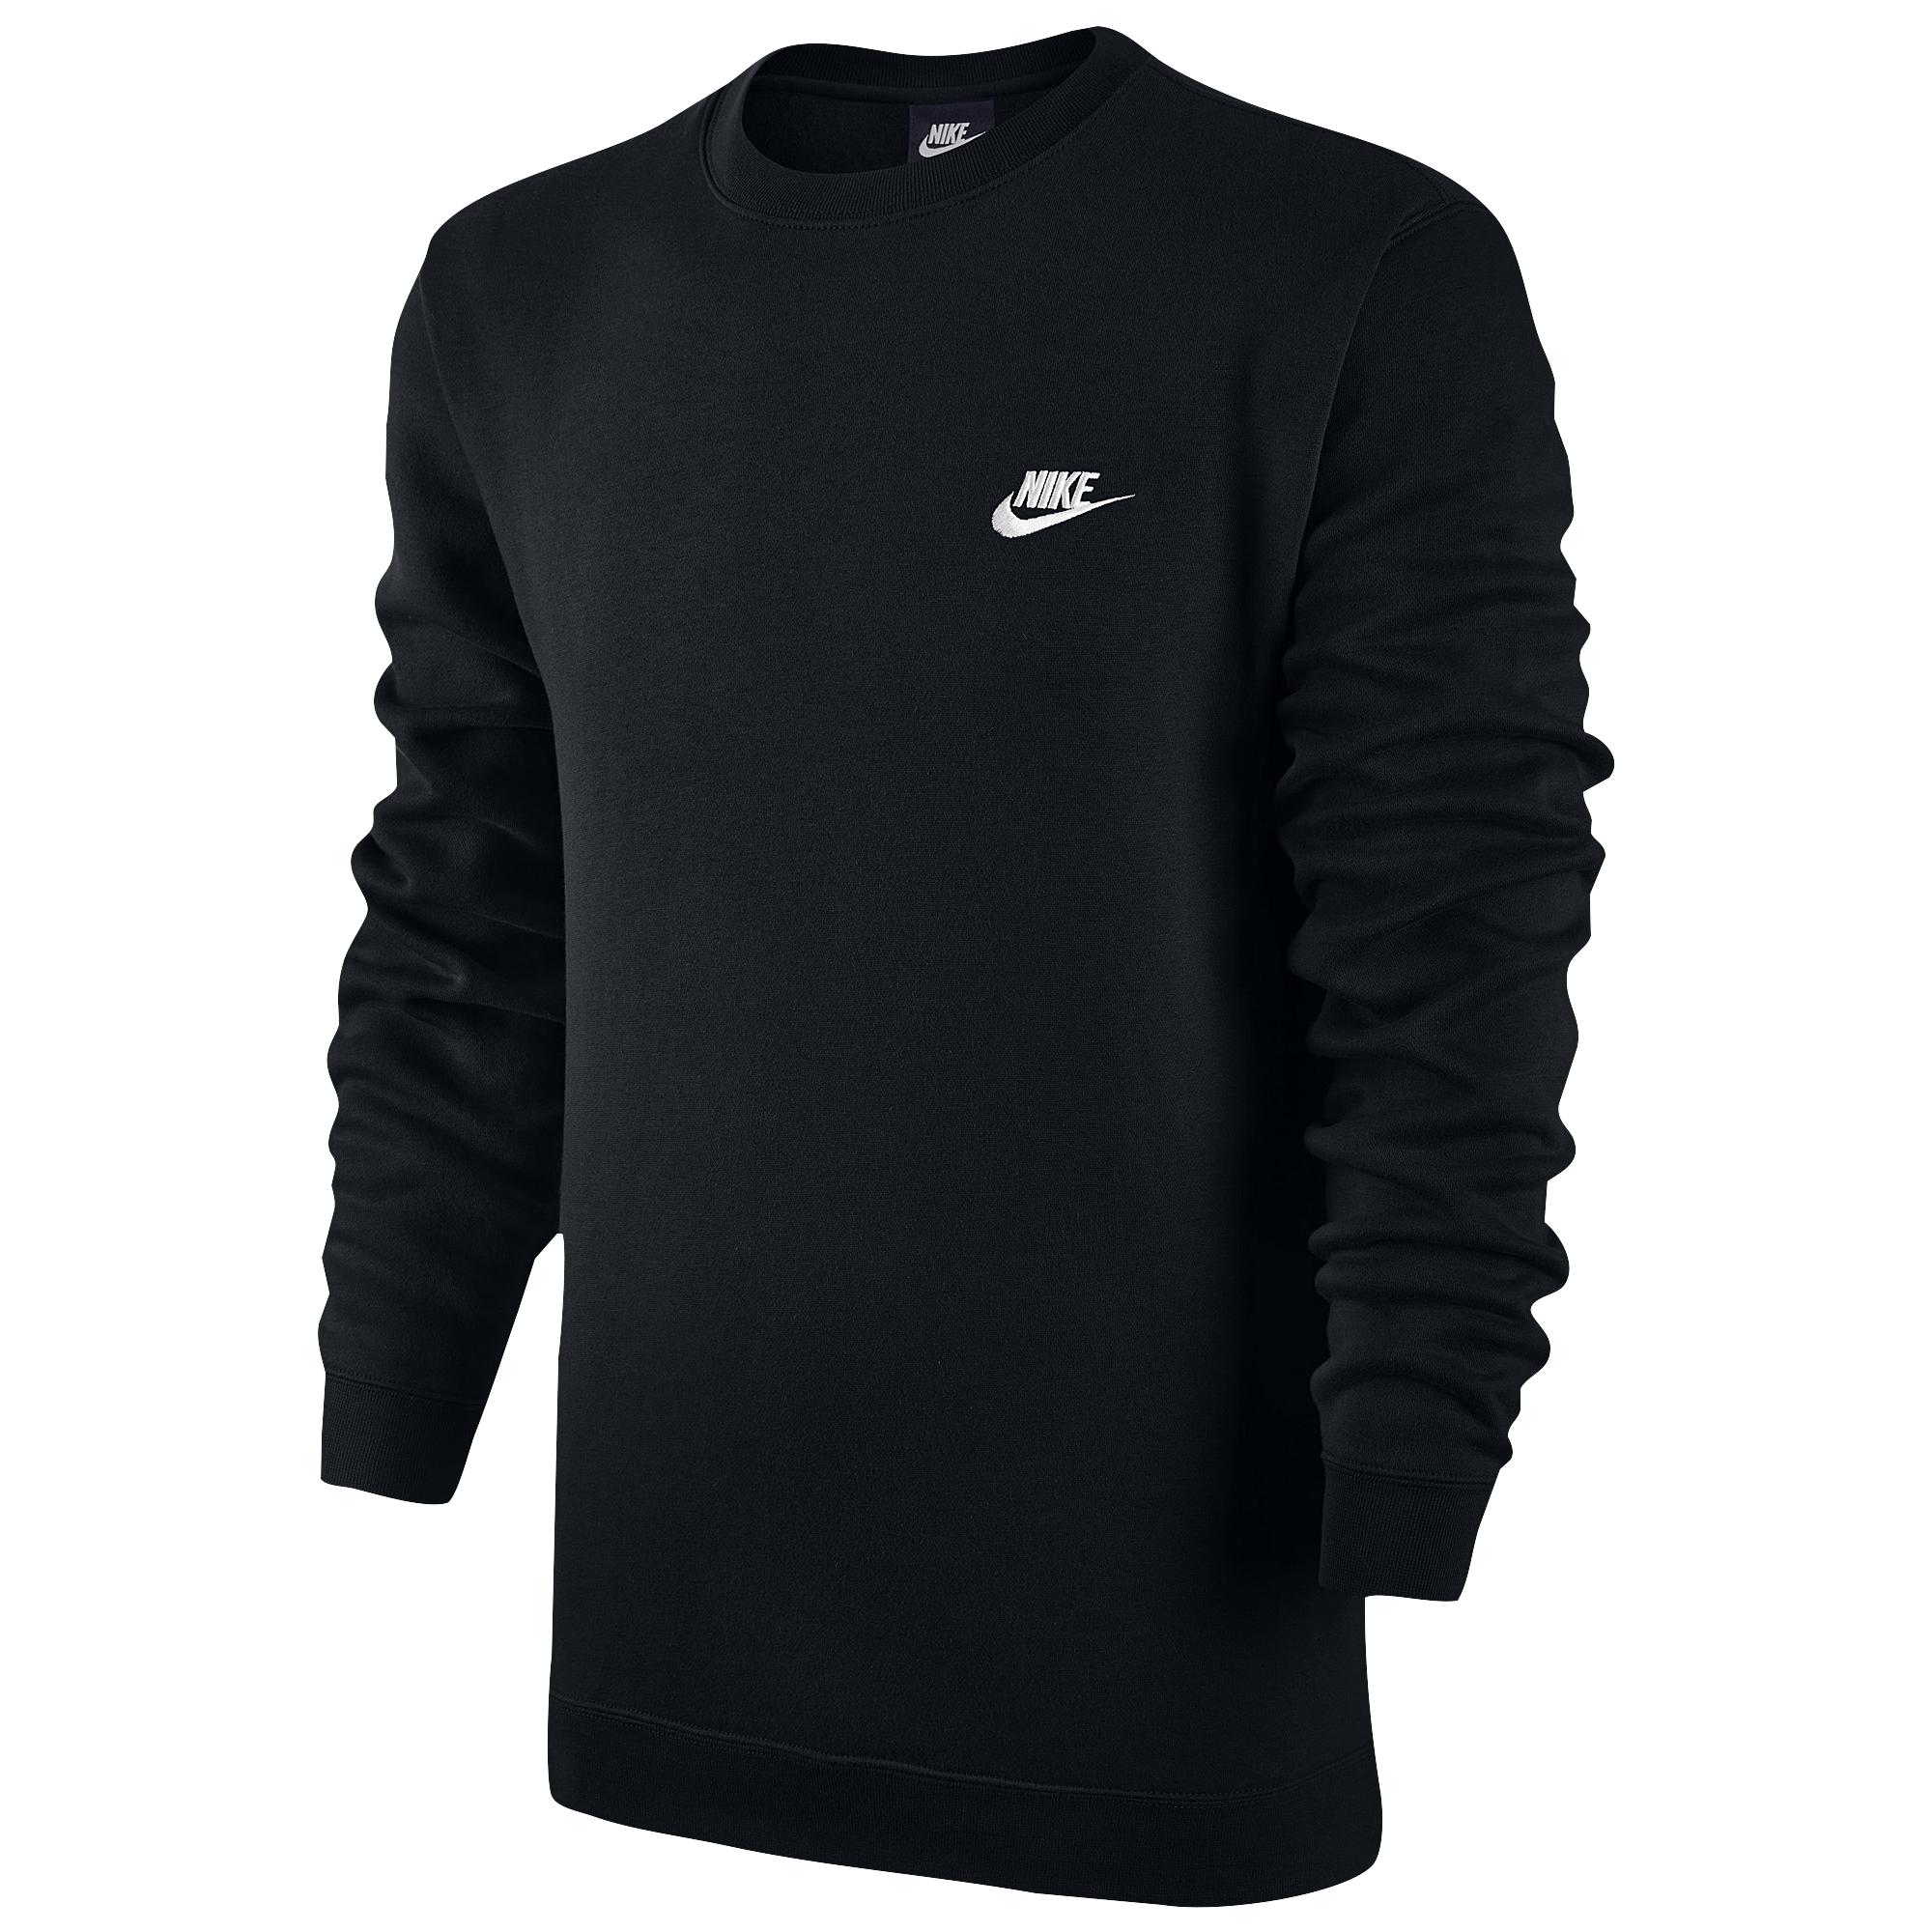 Nike Club Fleece Crew in Black for Men - Lyst